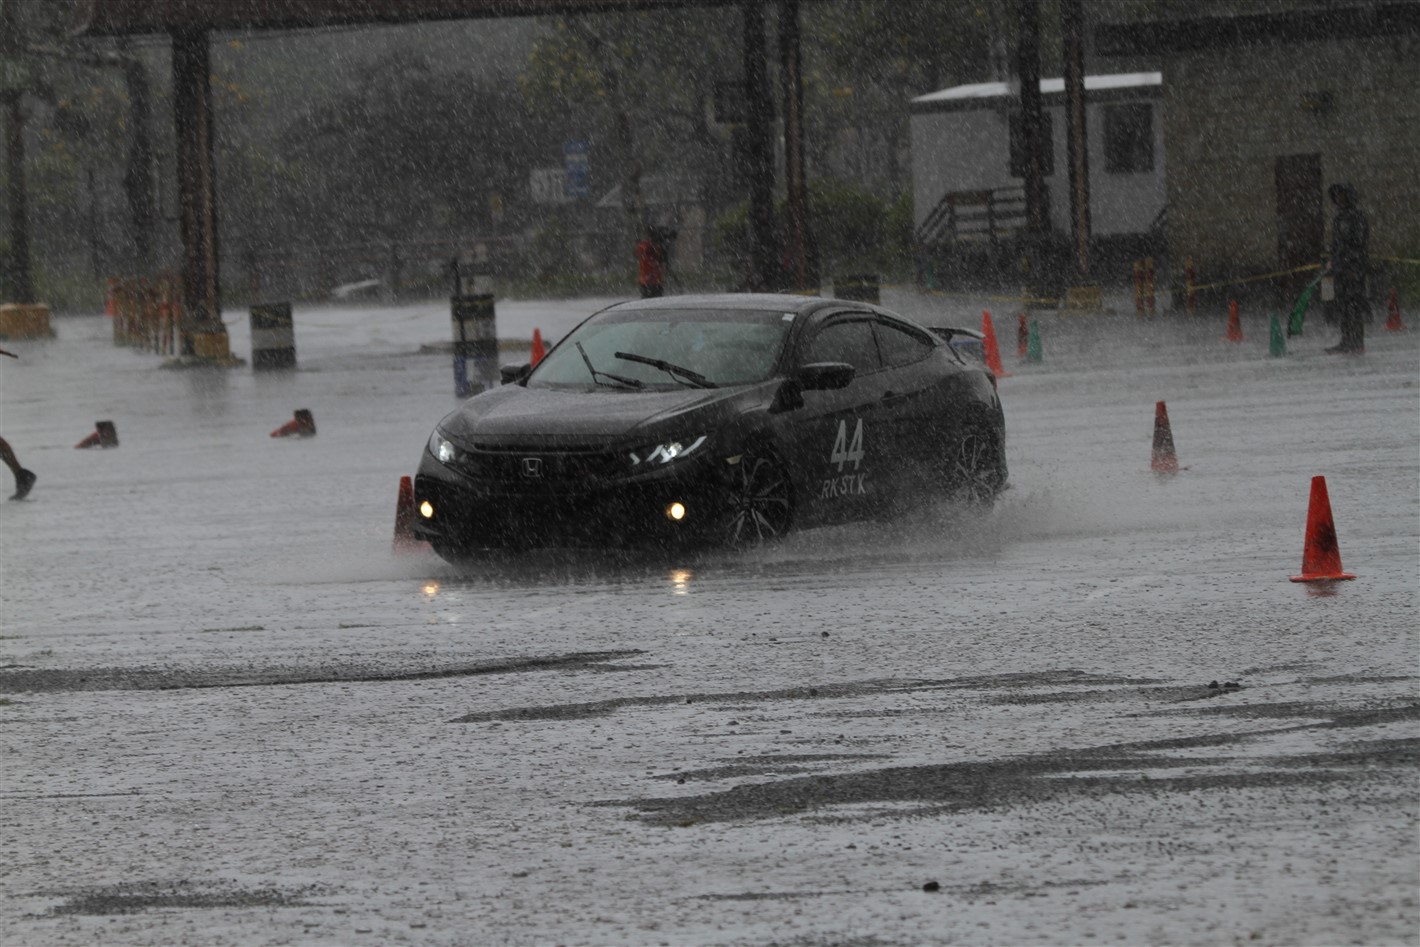 Race 5 in the rain